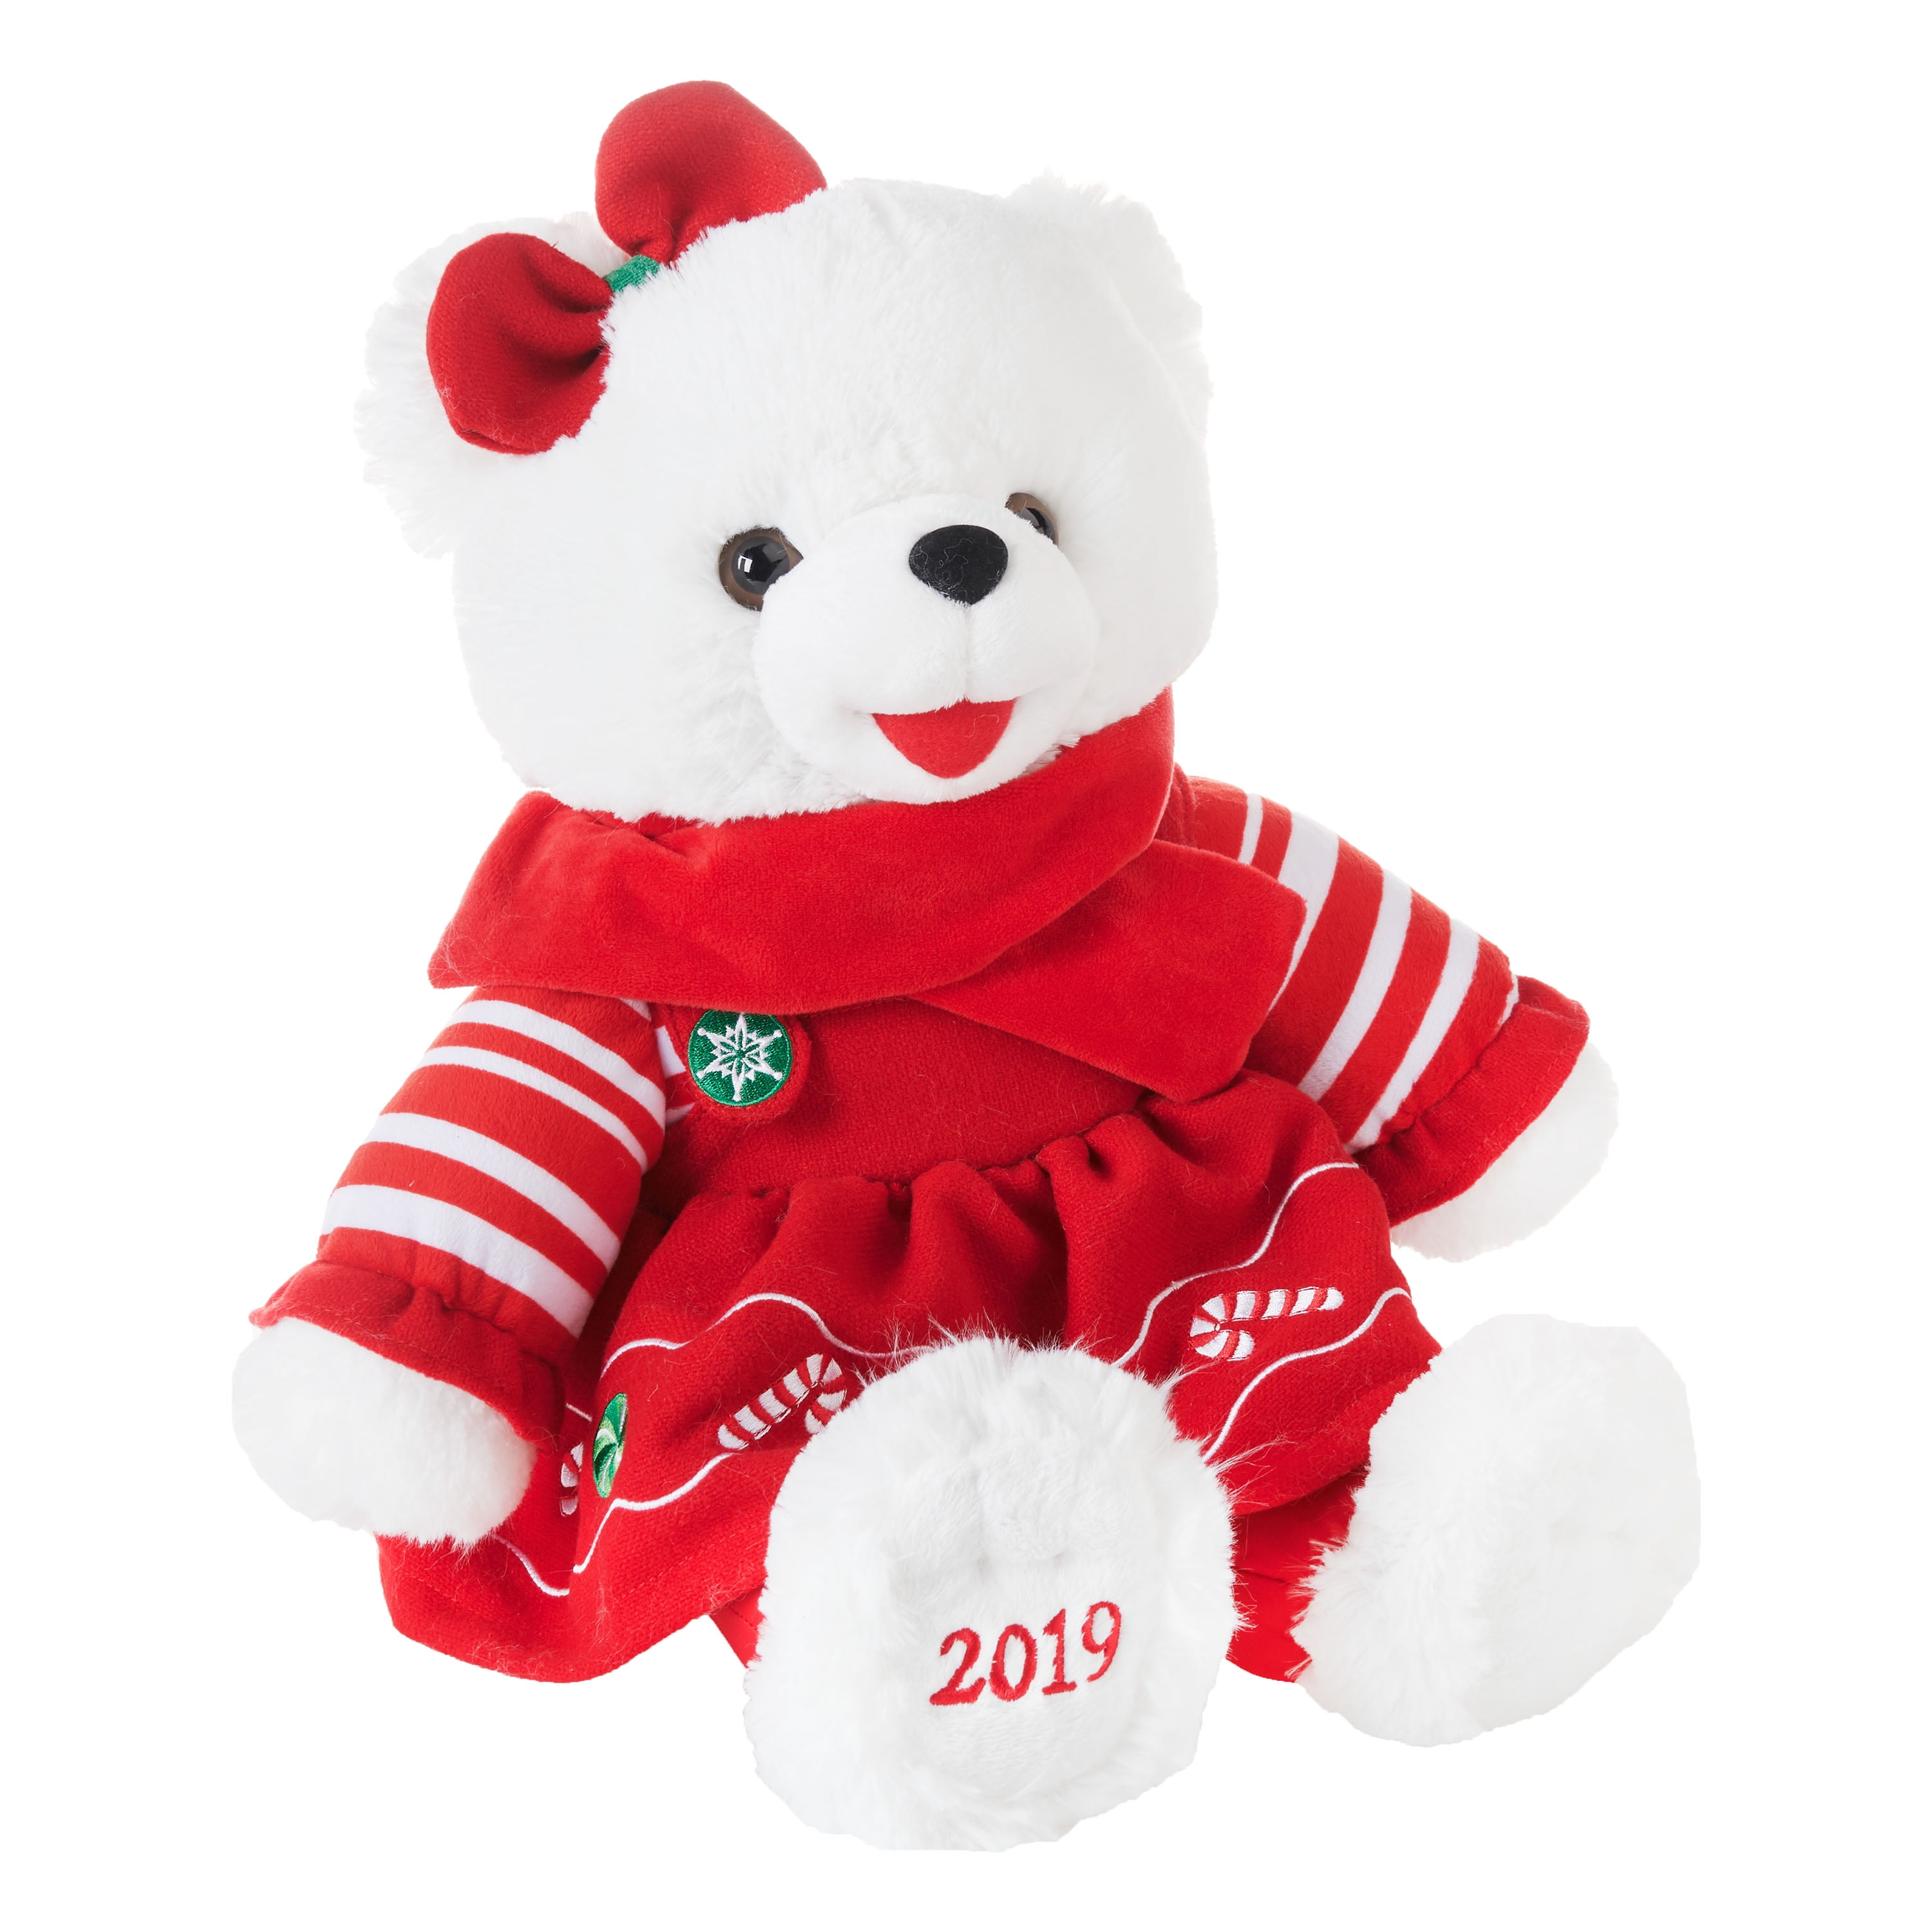 2019 WalMART CHRISTMAS Snowflake TEDDY BEAR White Girl 20" Red Outfit Brand NWT 